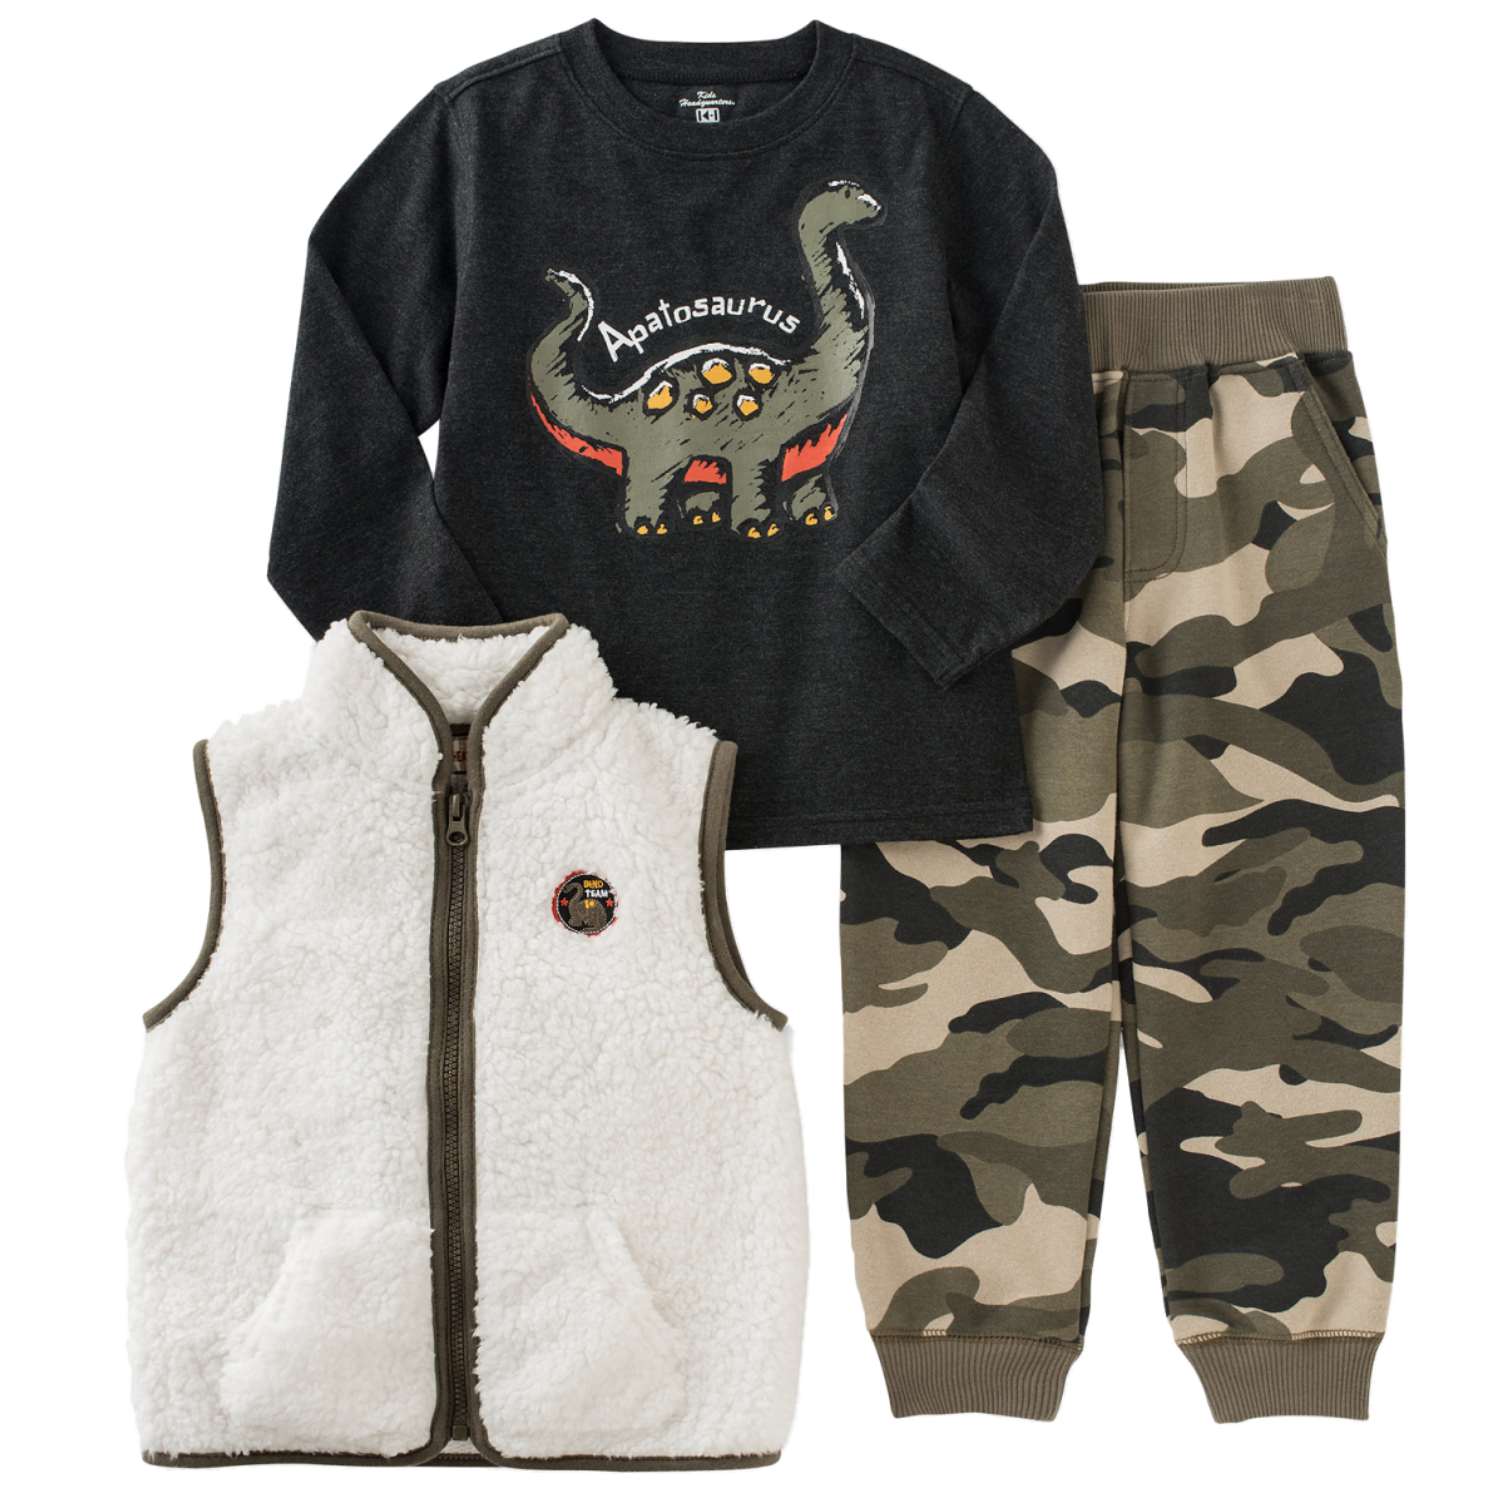 Kids Headquarters Infant Toddler Boys 3P Outfit Vest Dino Shirt Camo Pants 3-6m